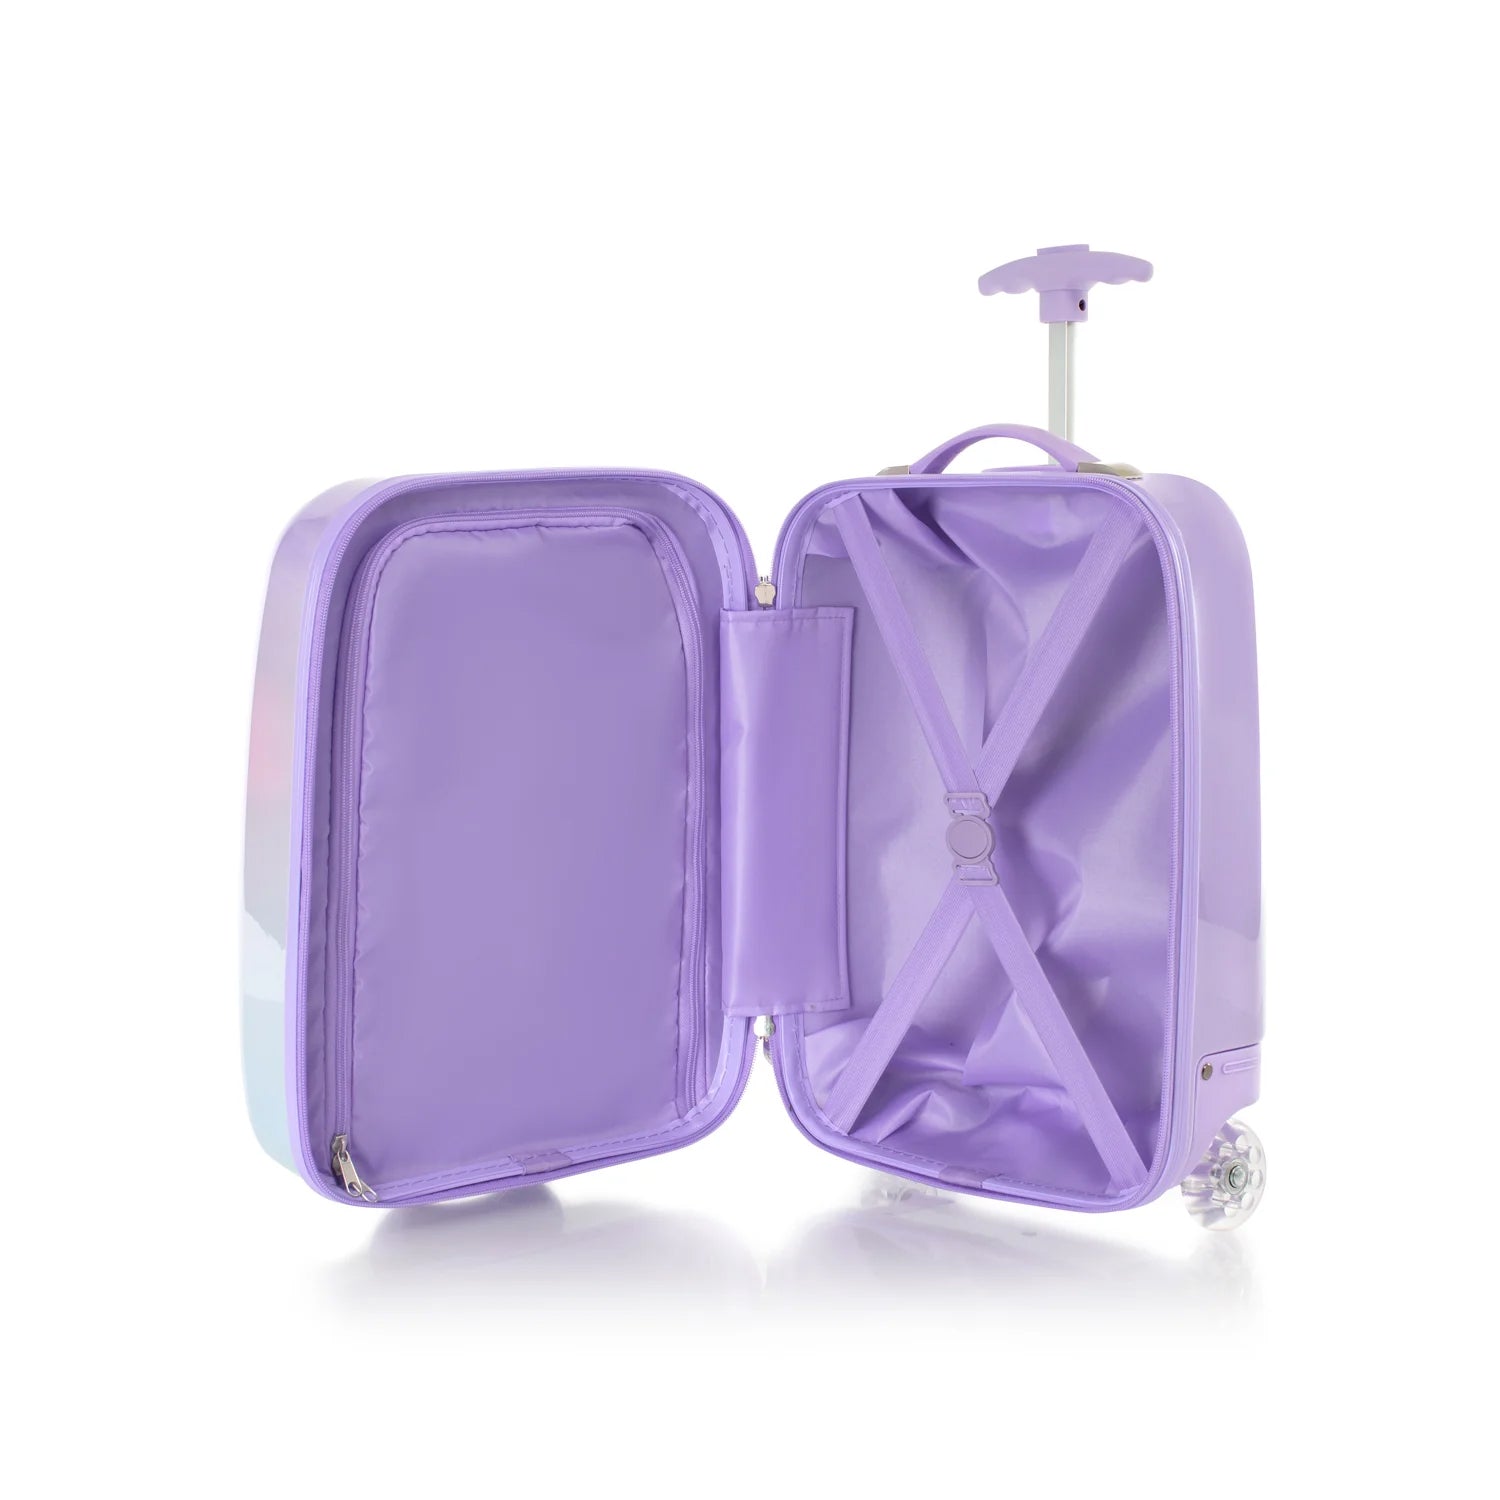 Disney Frozen Kids Luggage - Two Wheels - Hardcase - Polycarbonate